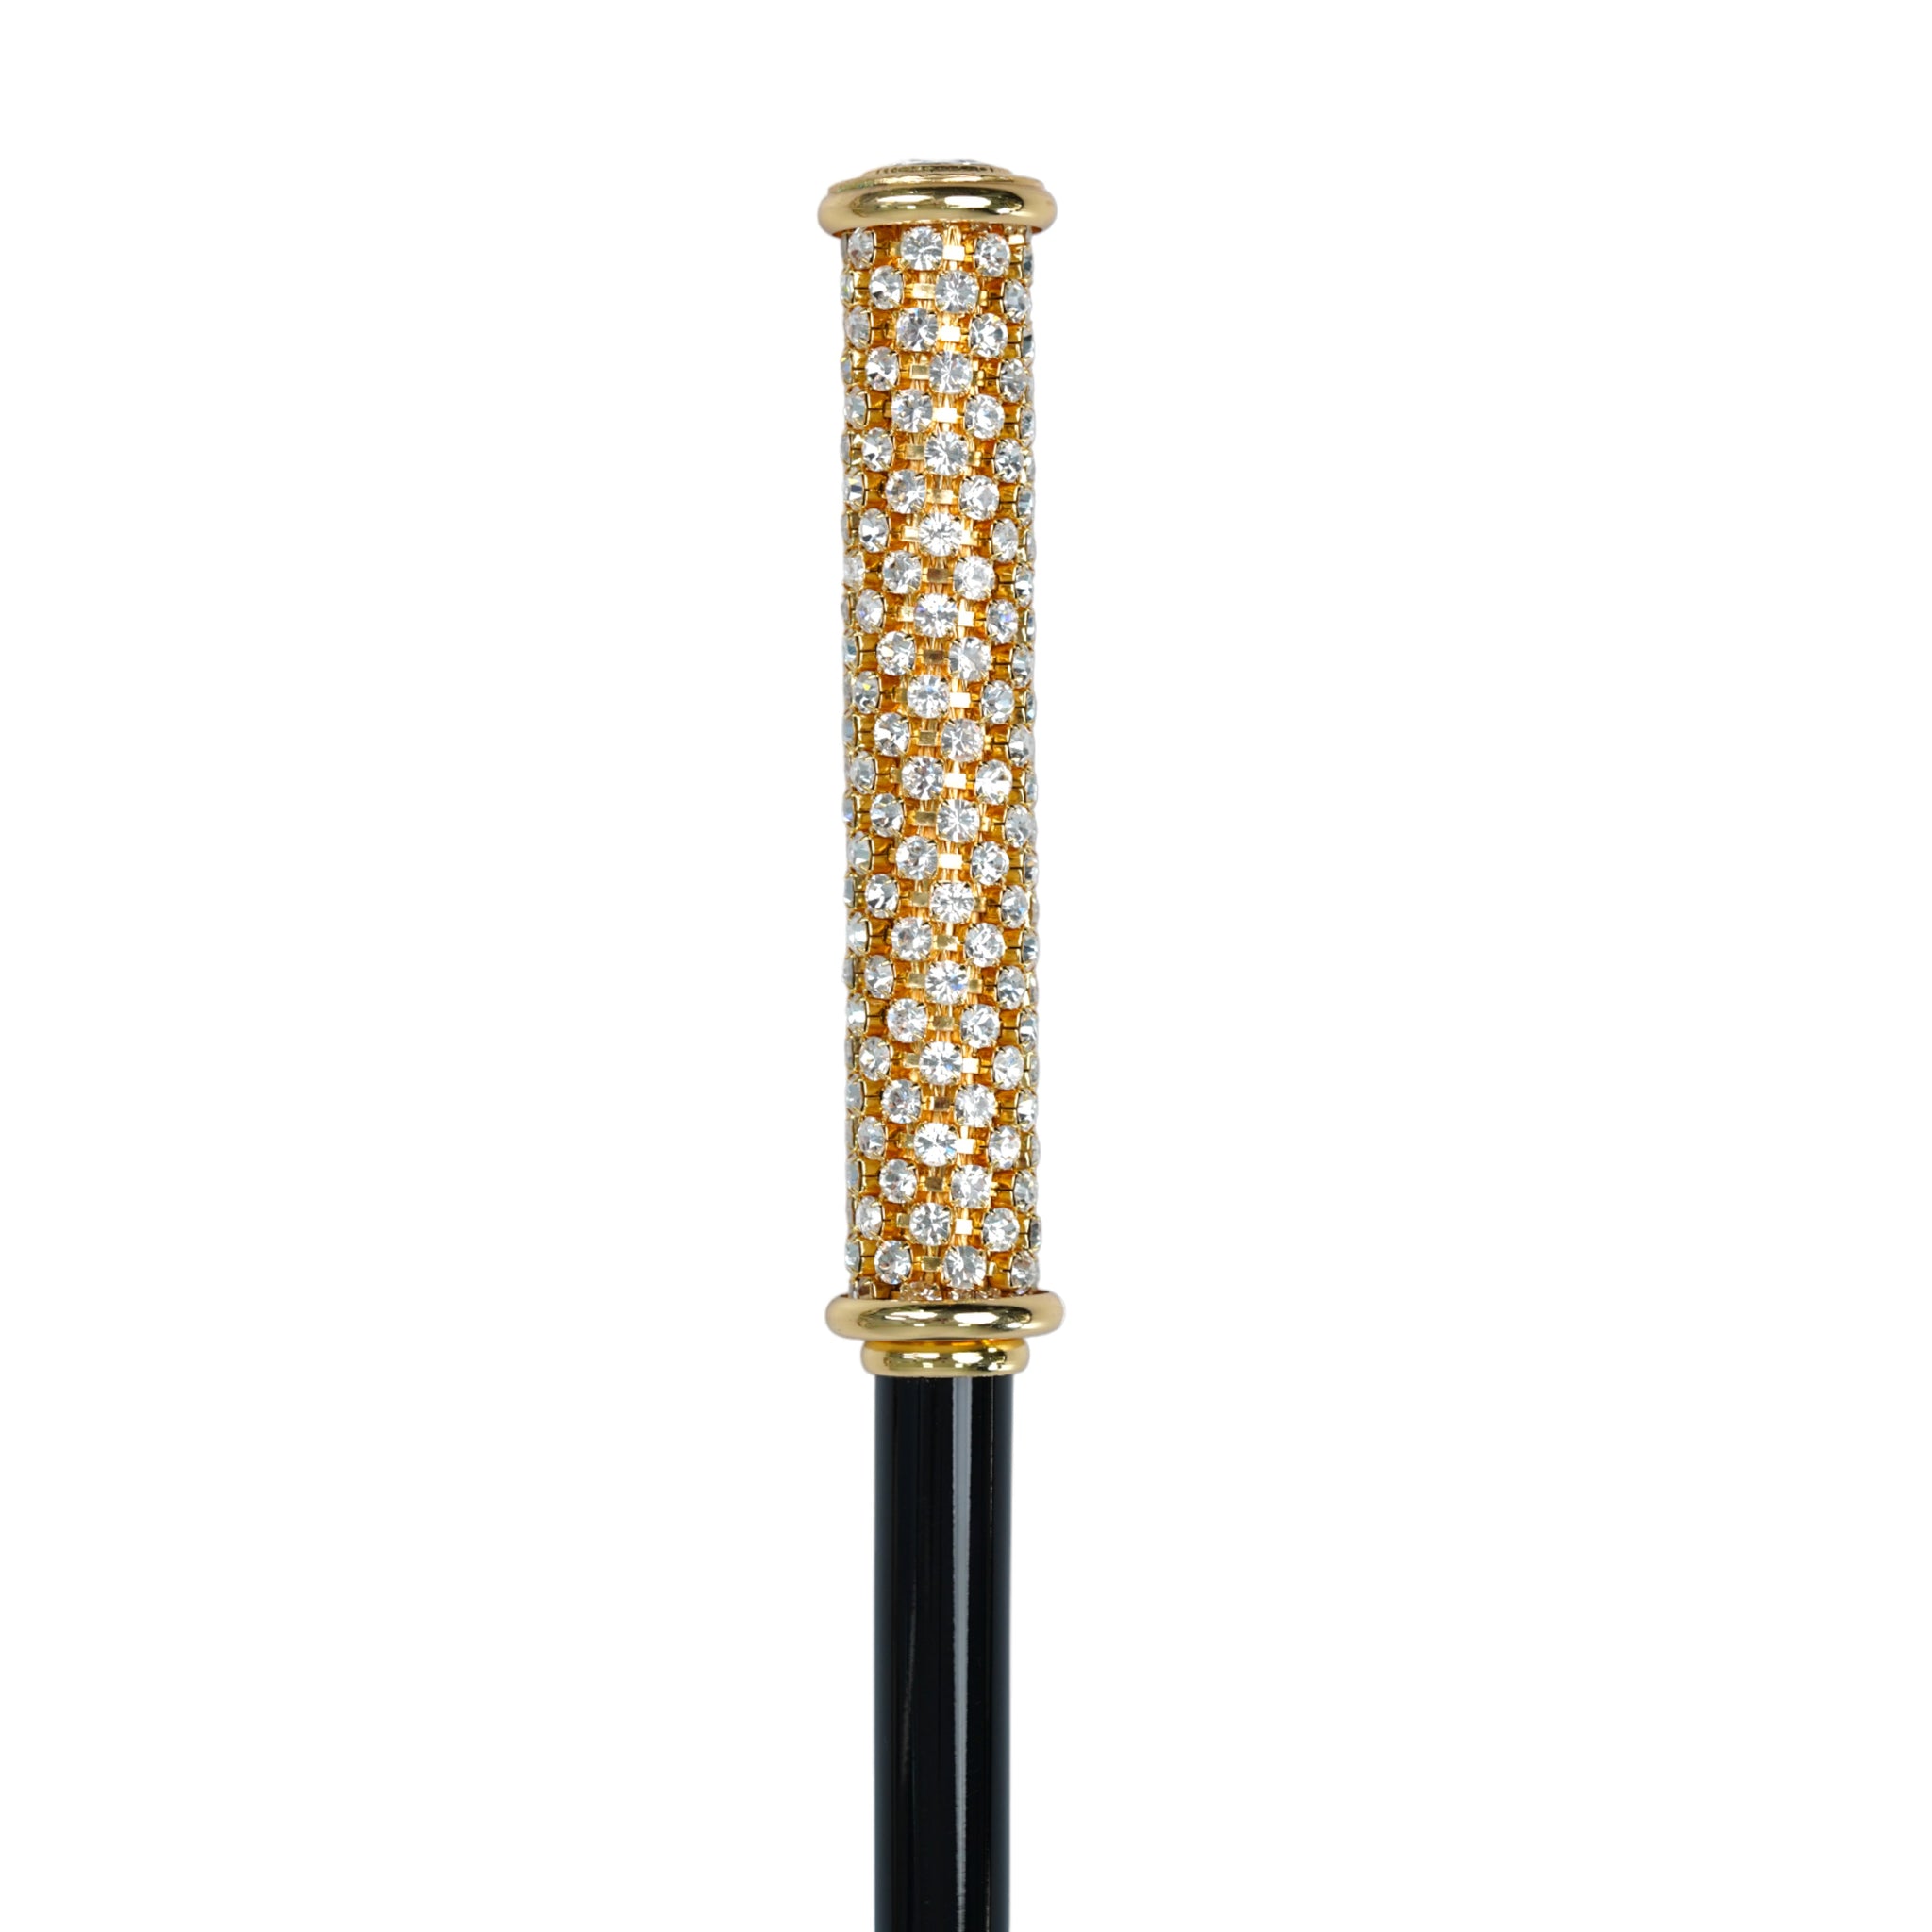 Nice Crystal Rhinestone Walking Stick – ilMarchesato - Luxury